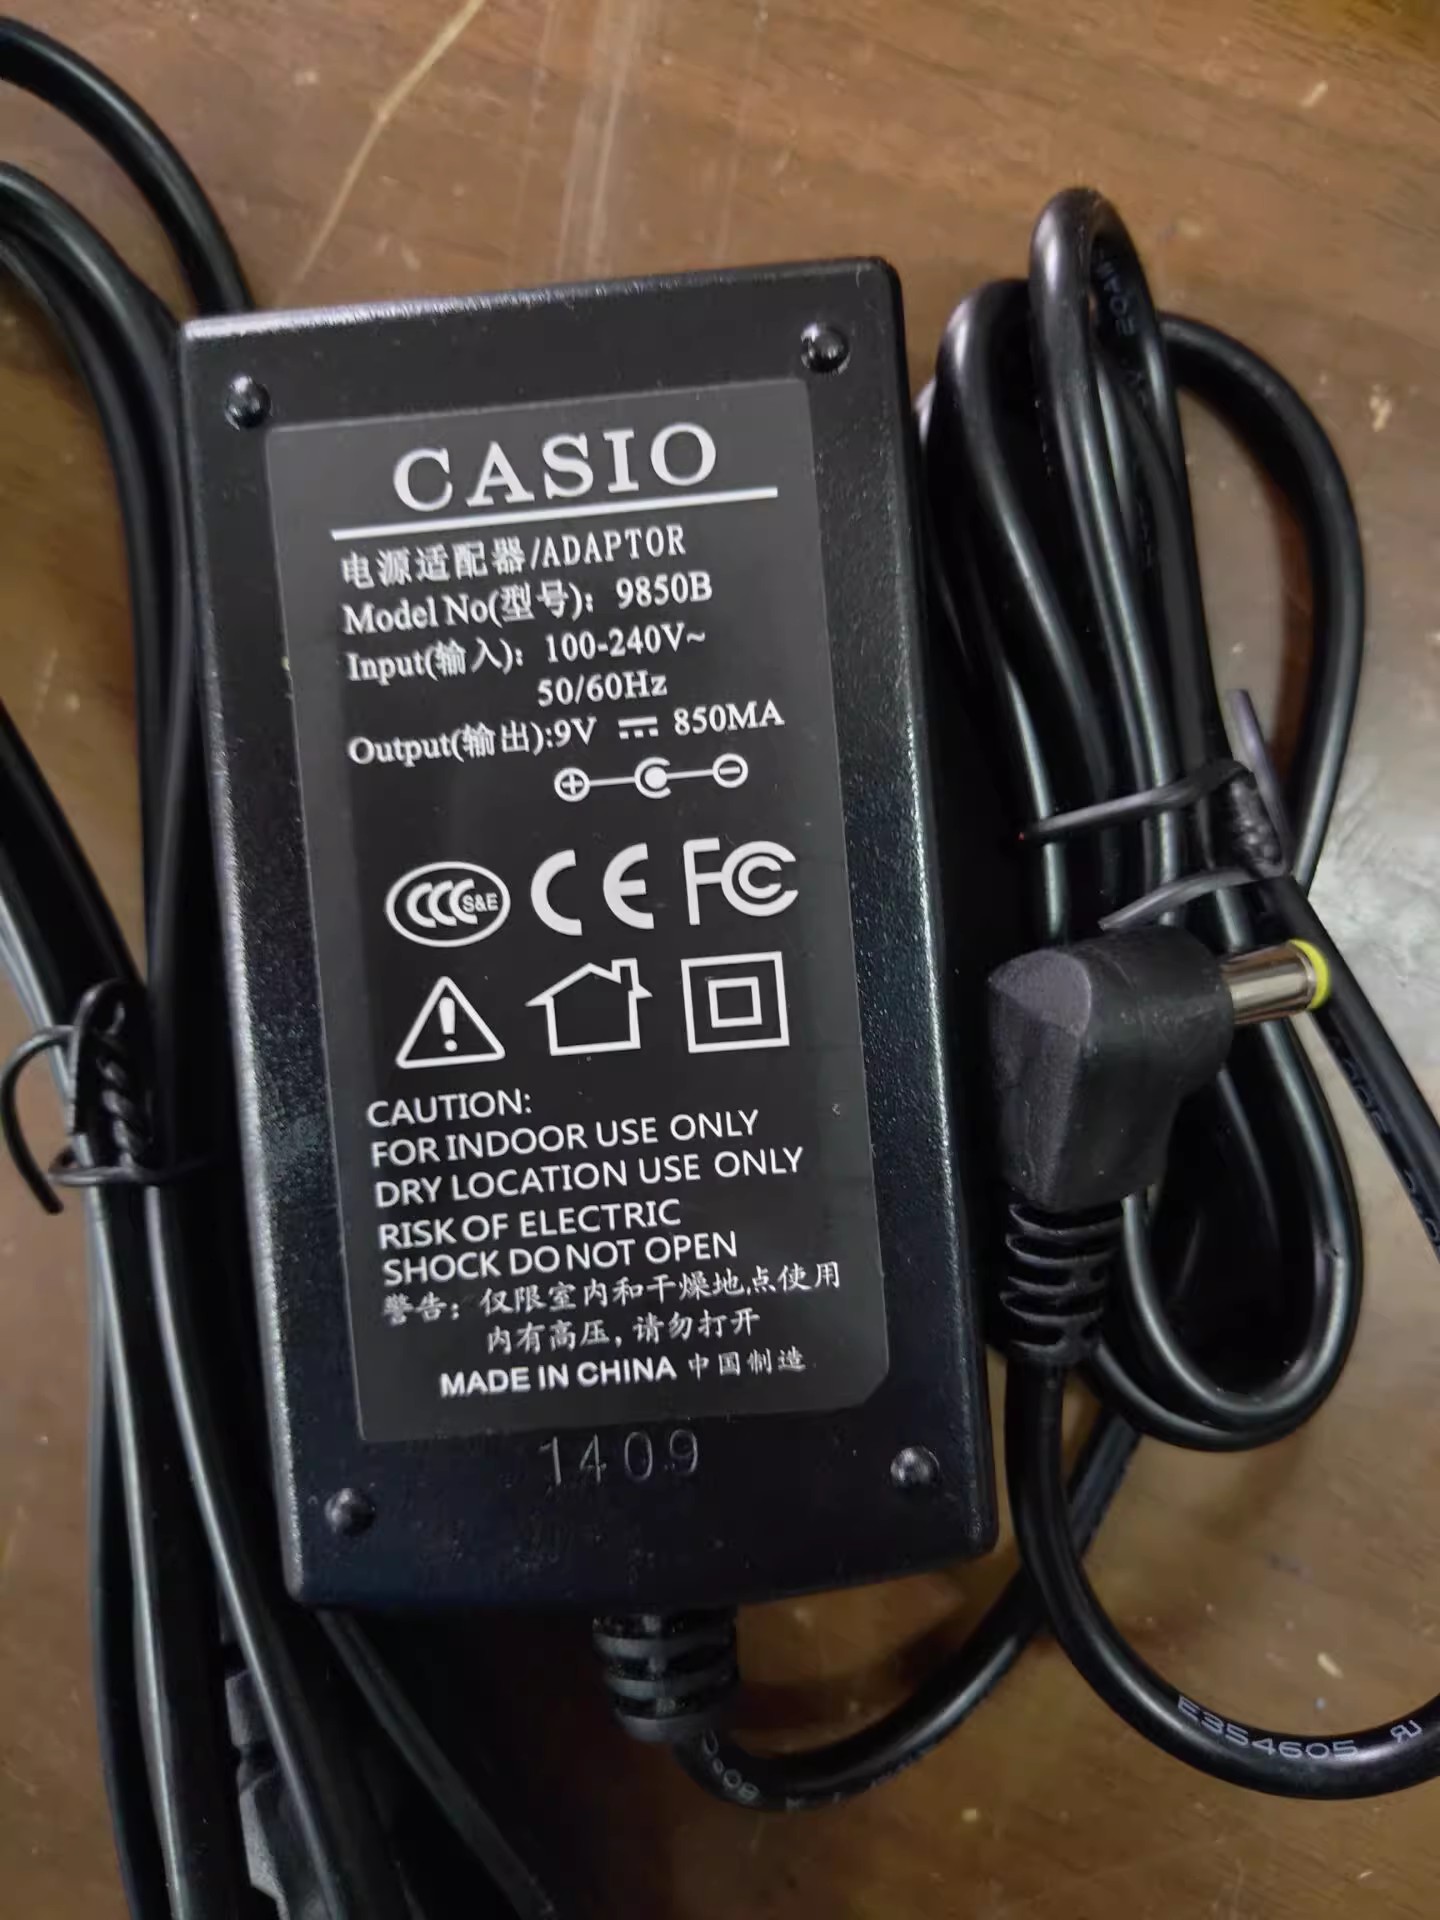 *Brand NEW* 9850B CASIO ctk-500 510 550 588 599 9V 850MA AC ADAPTER POWER Supply